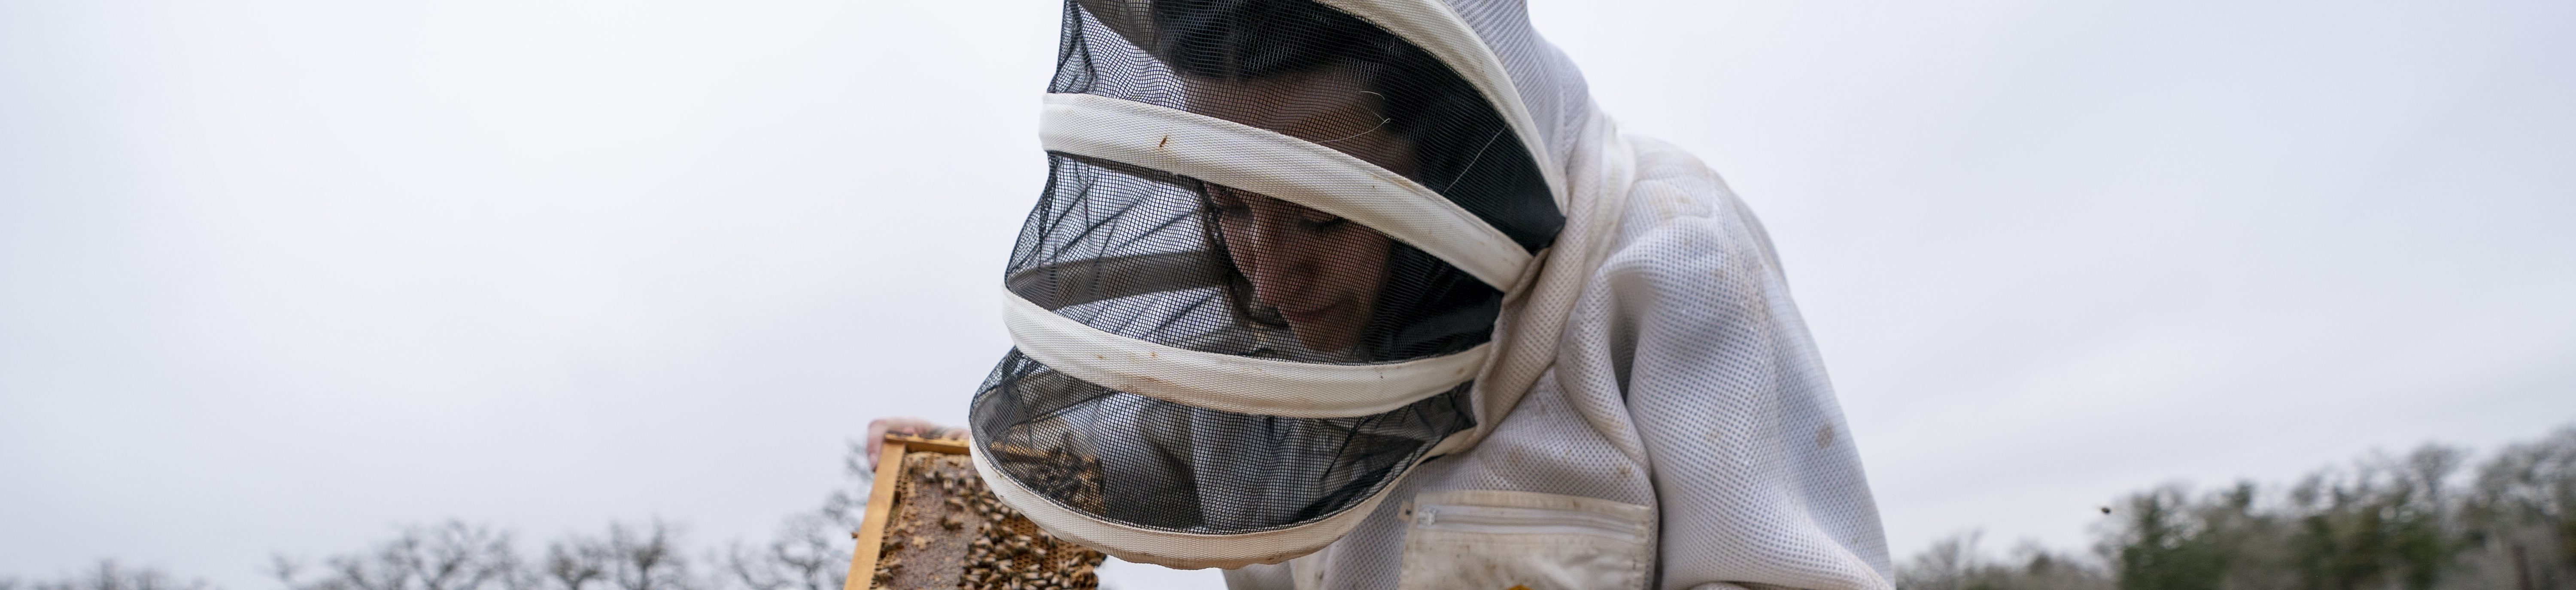 a woman wearing beekeeping protective gear tending to honeybees